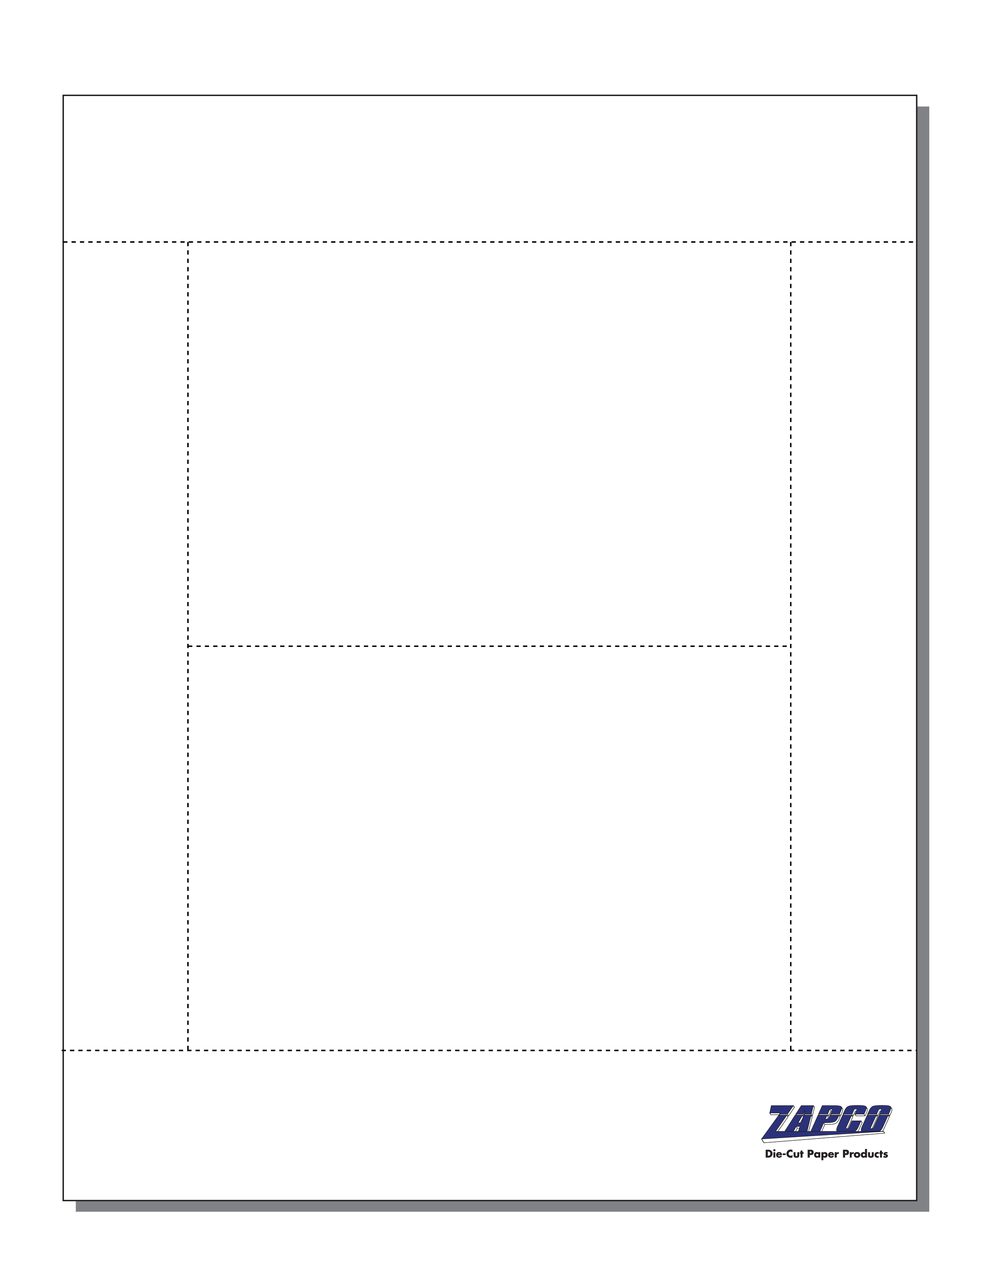 Item 986: 2-up 6" x 4" Post Card 8 1/2" x 11" Sheet(250 Sheets)